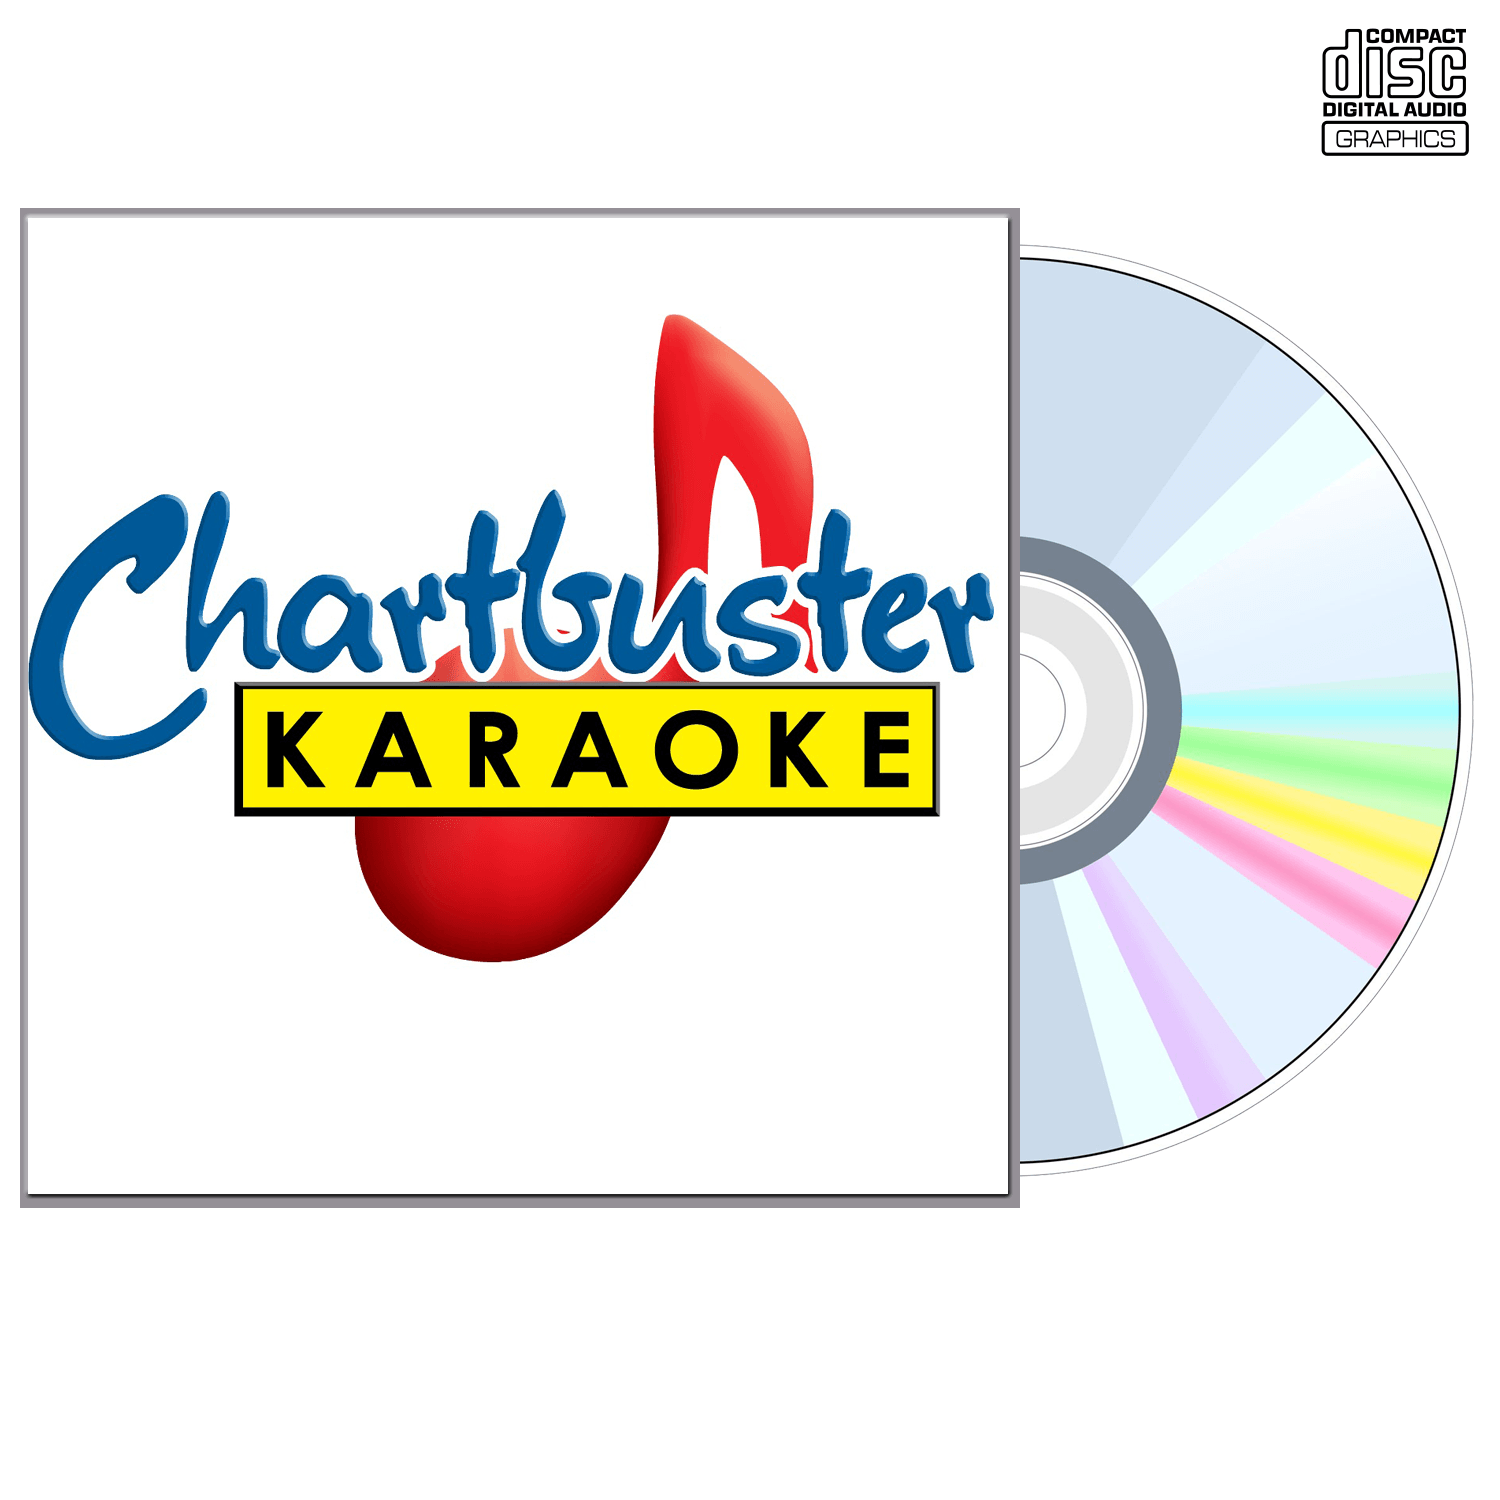 Best Of Lonestar - CD+G - Chartbuster Karaoke - Karaoke Home Entertainment